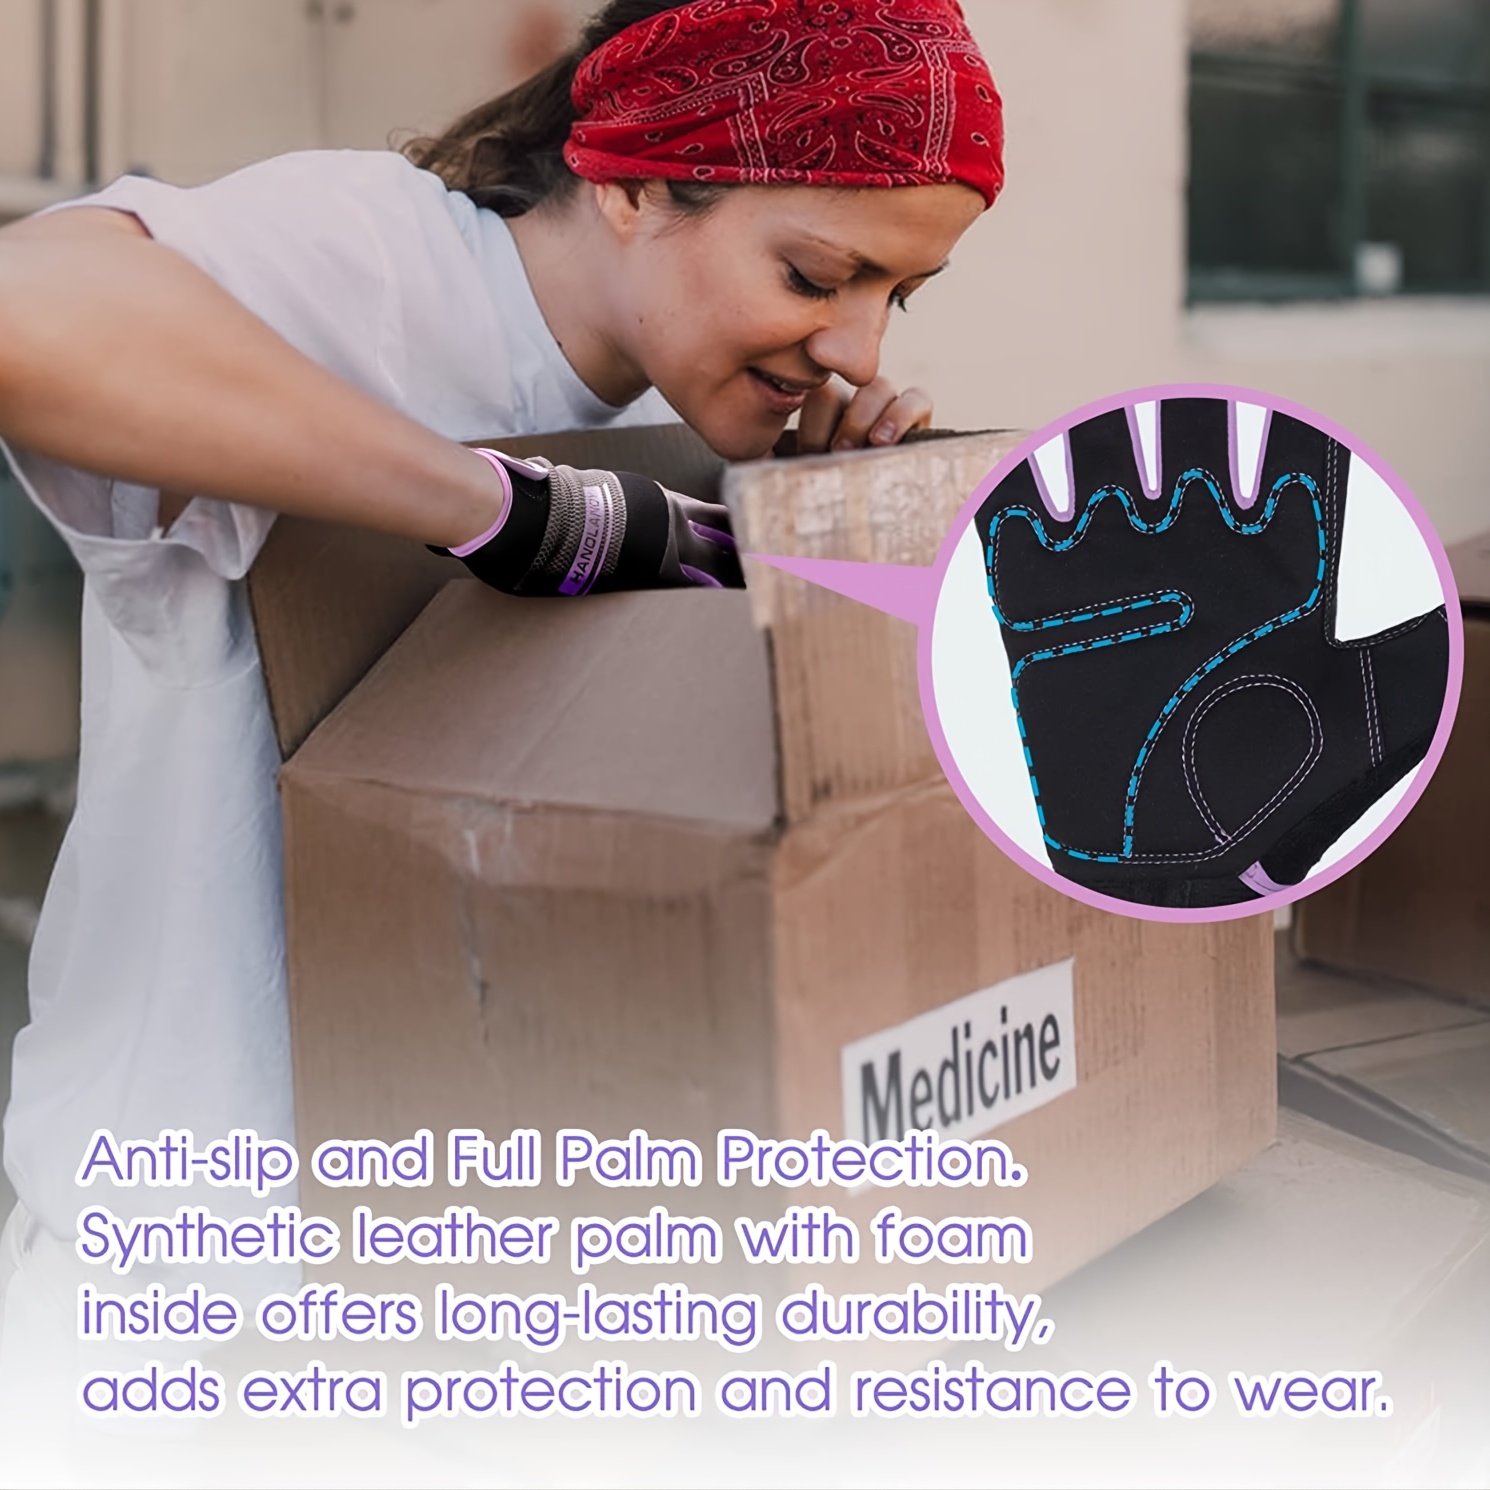 Handlandy Work Gloves Men & Women Utility Mechanic Working Gloves Touch Screen Flexible Breathable Yard Work Gloves (Medium Grey)